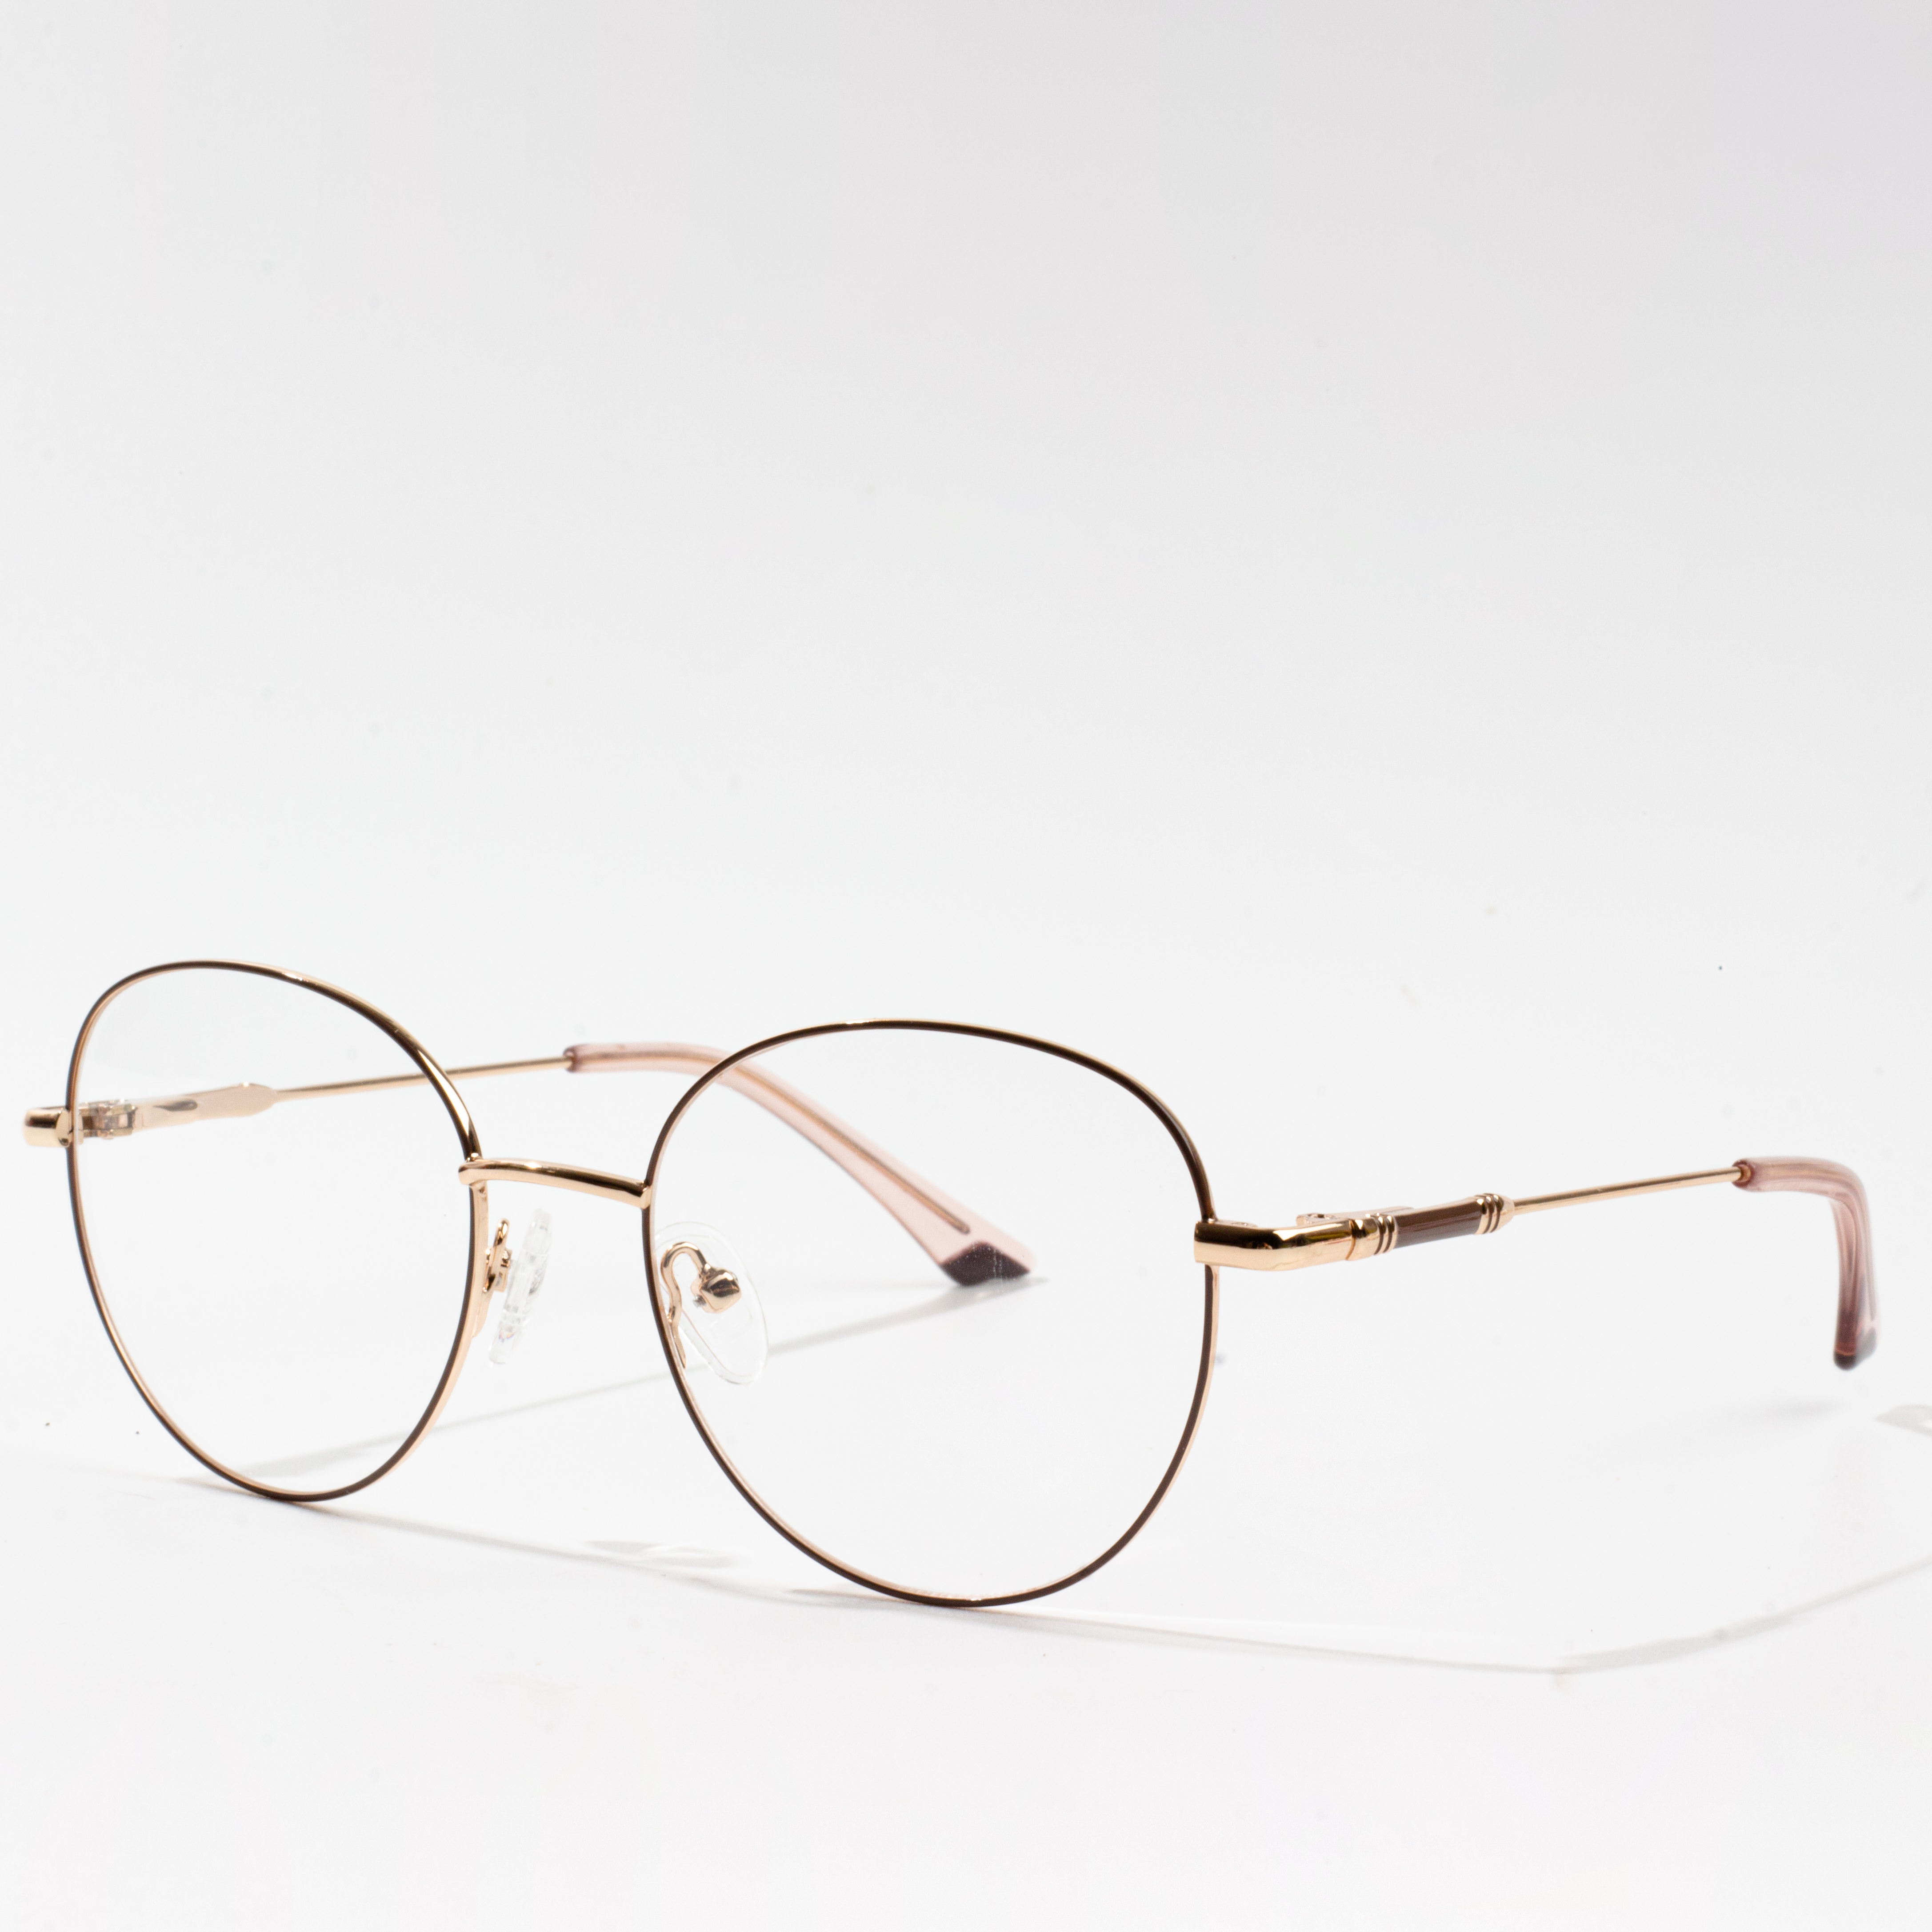 kleurrike bril frames